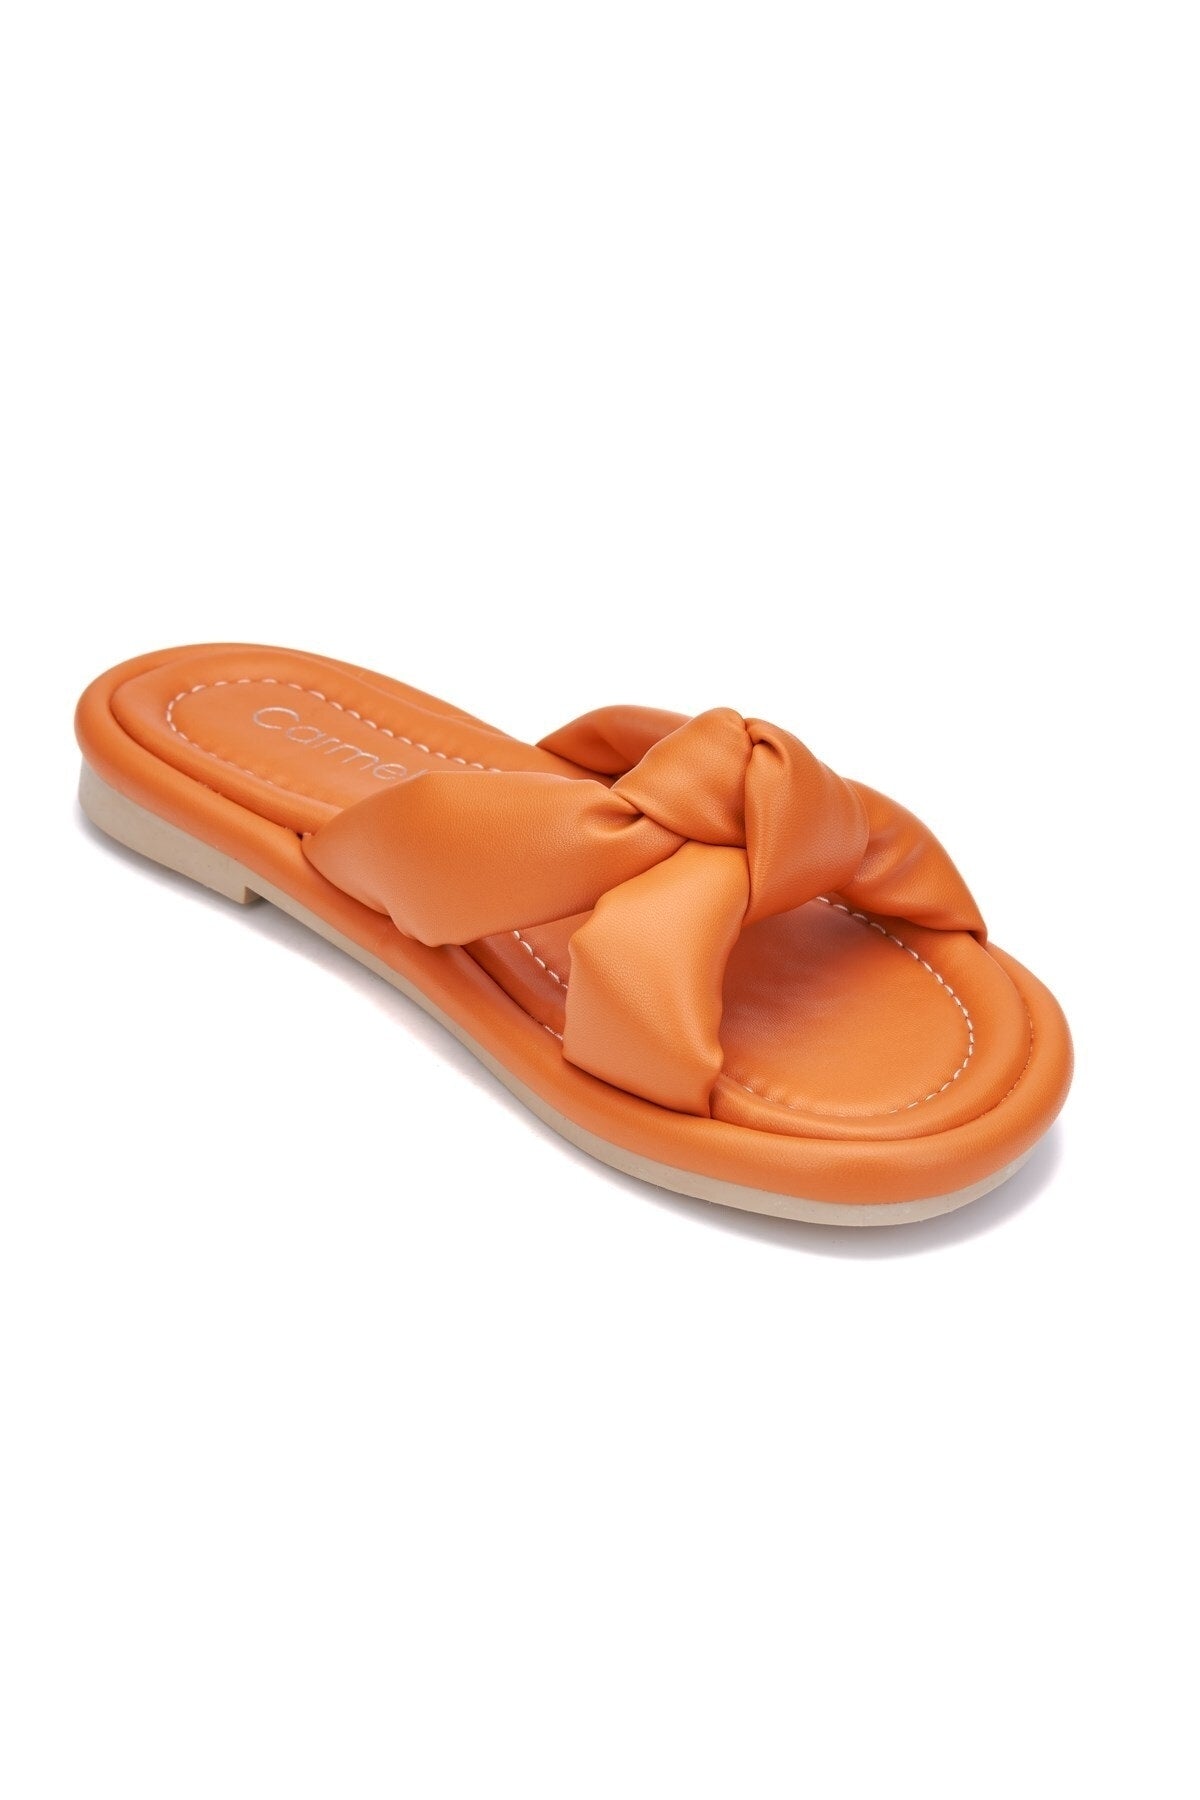 Daily Women Puff Slipper Soft Sole Light Flexible Ribbon Summer Casual Sandals 023